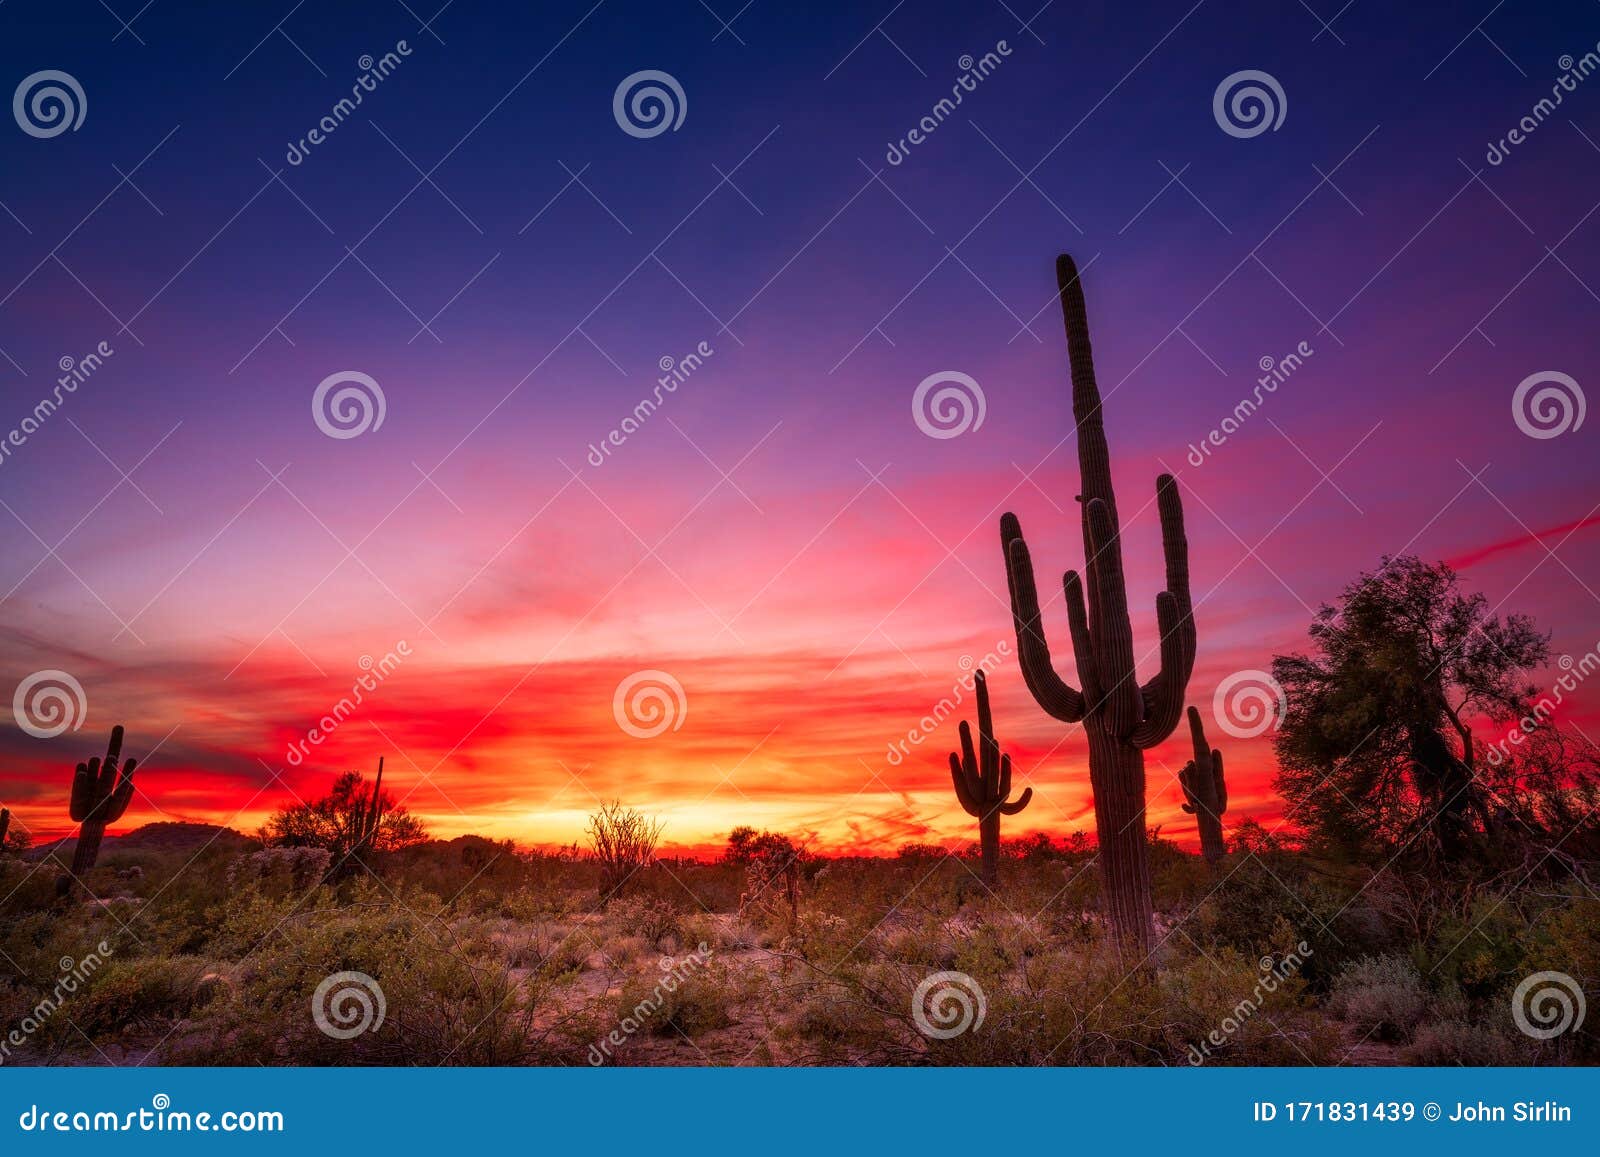 arizona desert landscape at sunset